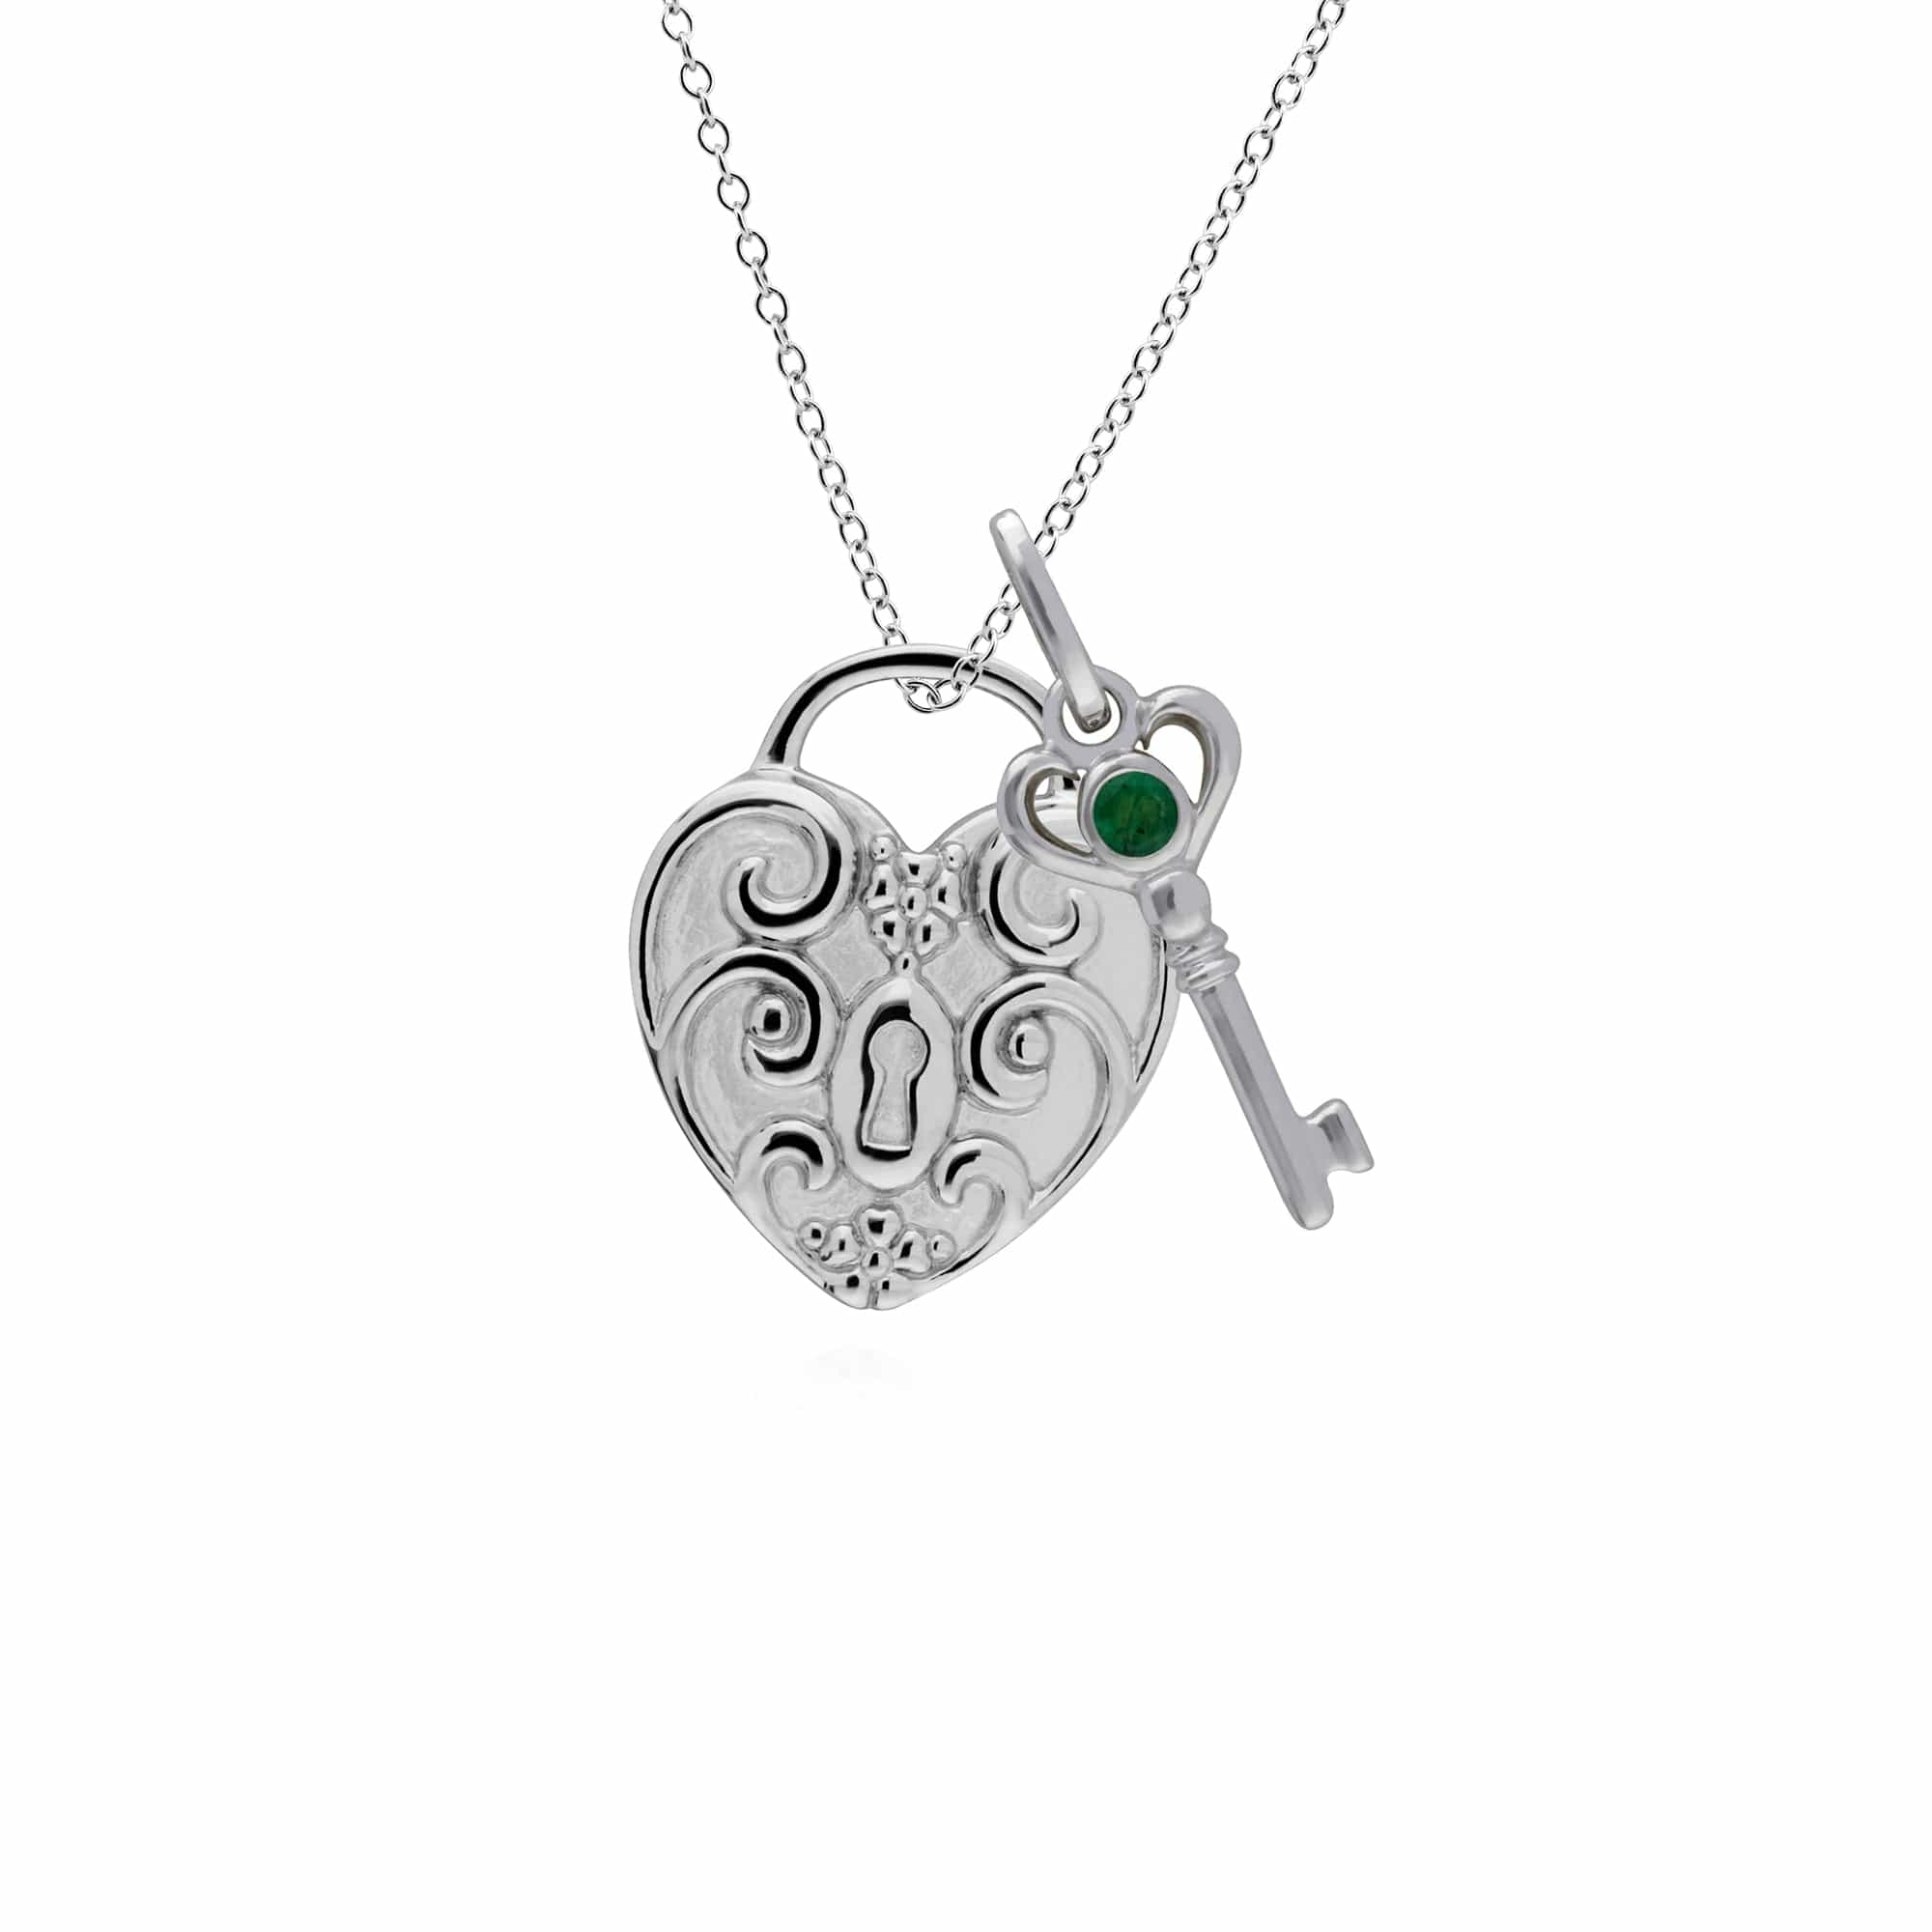 270P026401925-270P026601925 Classic Swirl Heart Lock Pendant & Emerald Key Charm in 925 Sterling Silver 1